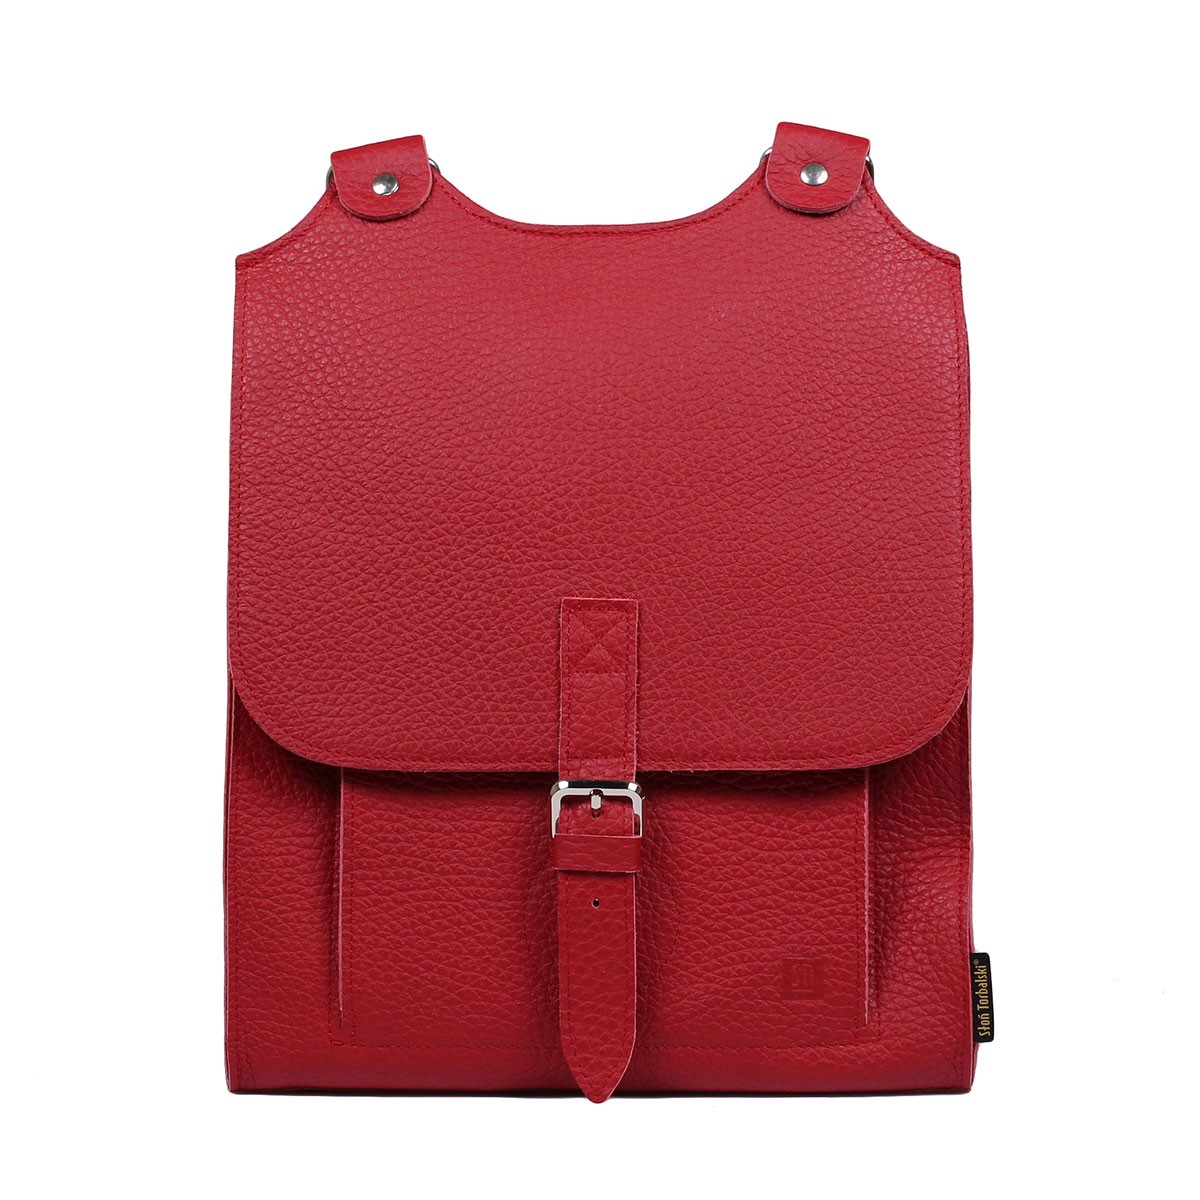 czerwony-plecak-skorzany-vintage-Bookpack-00-09-0909-E20-93158.jpg